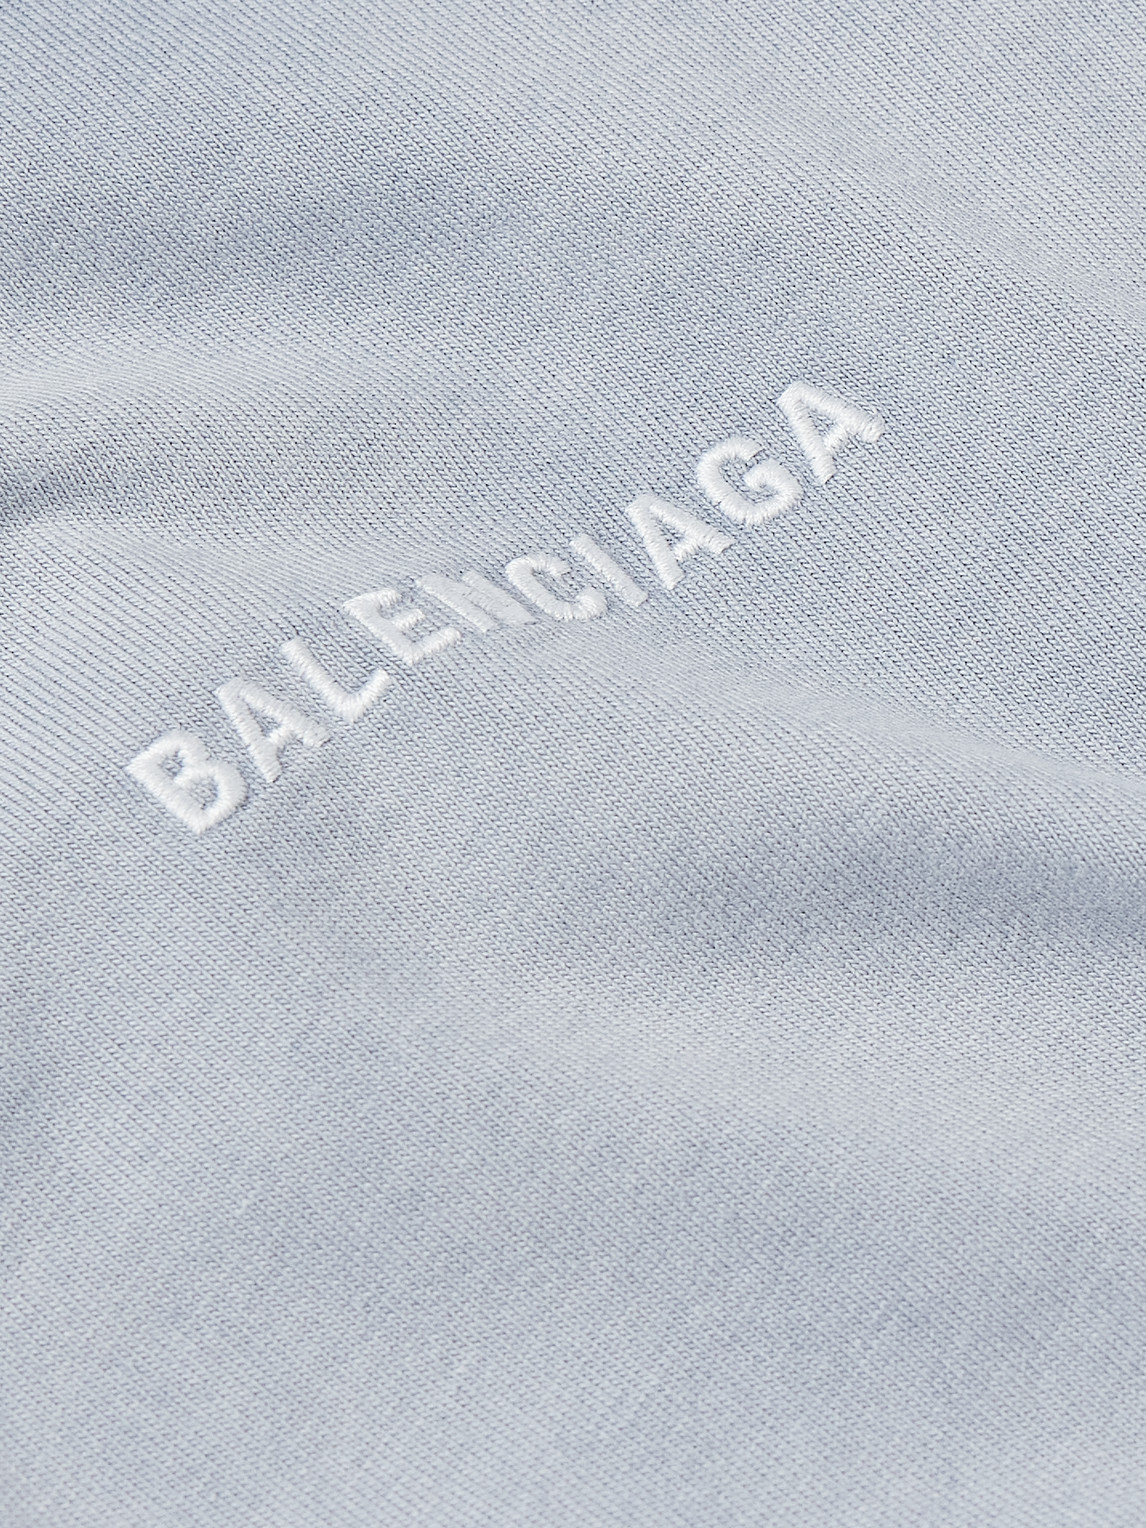 Shop Balenciaga Logo-embroidered Cotton-jersey T-shirt In Blue